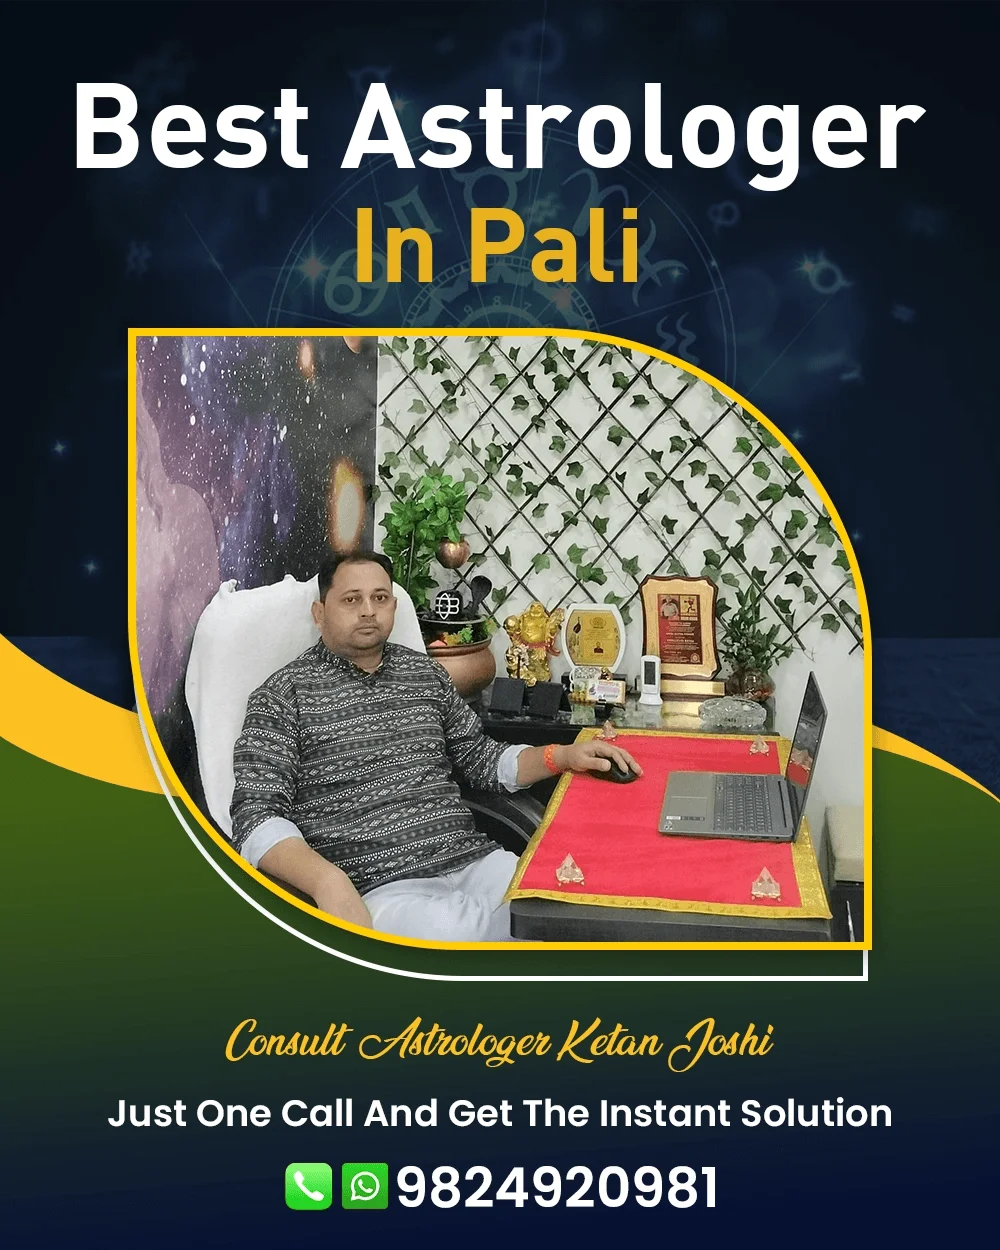 Best Astrologer In Pali